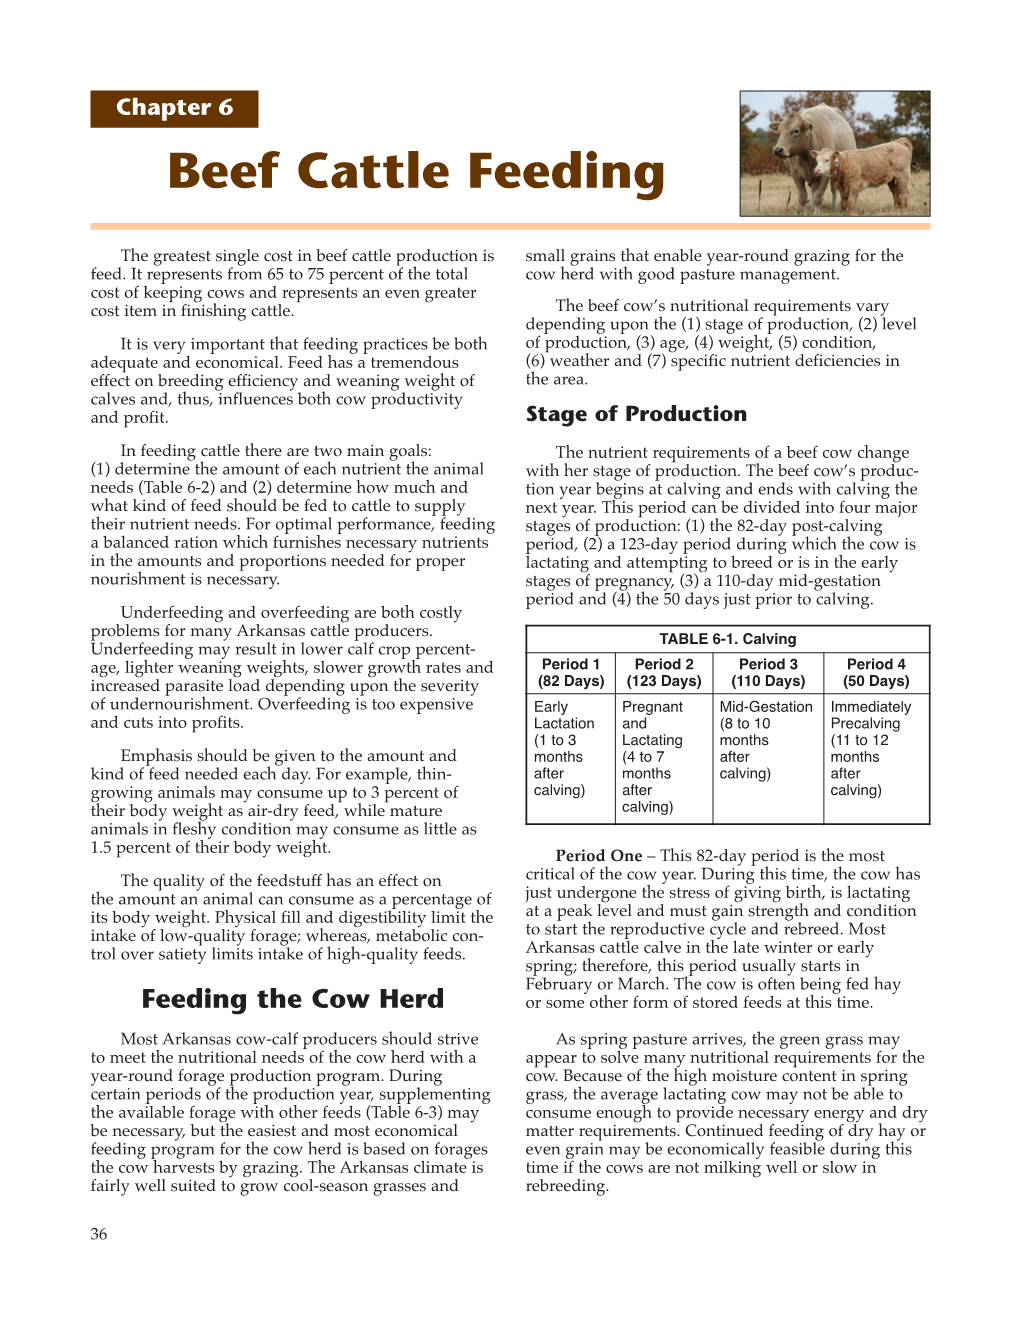 Beef Cattle Feeding